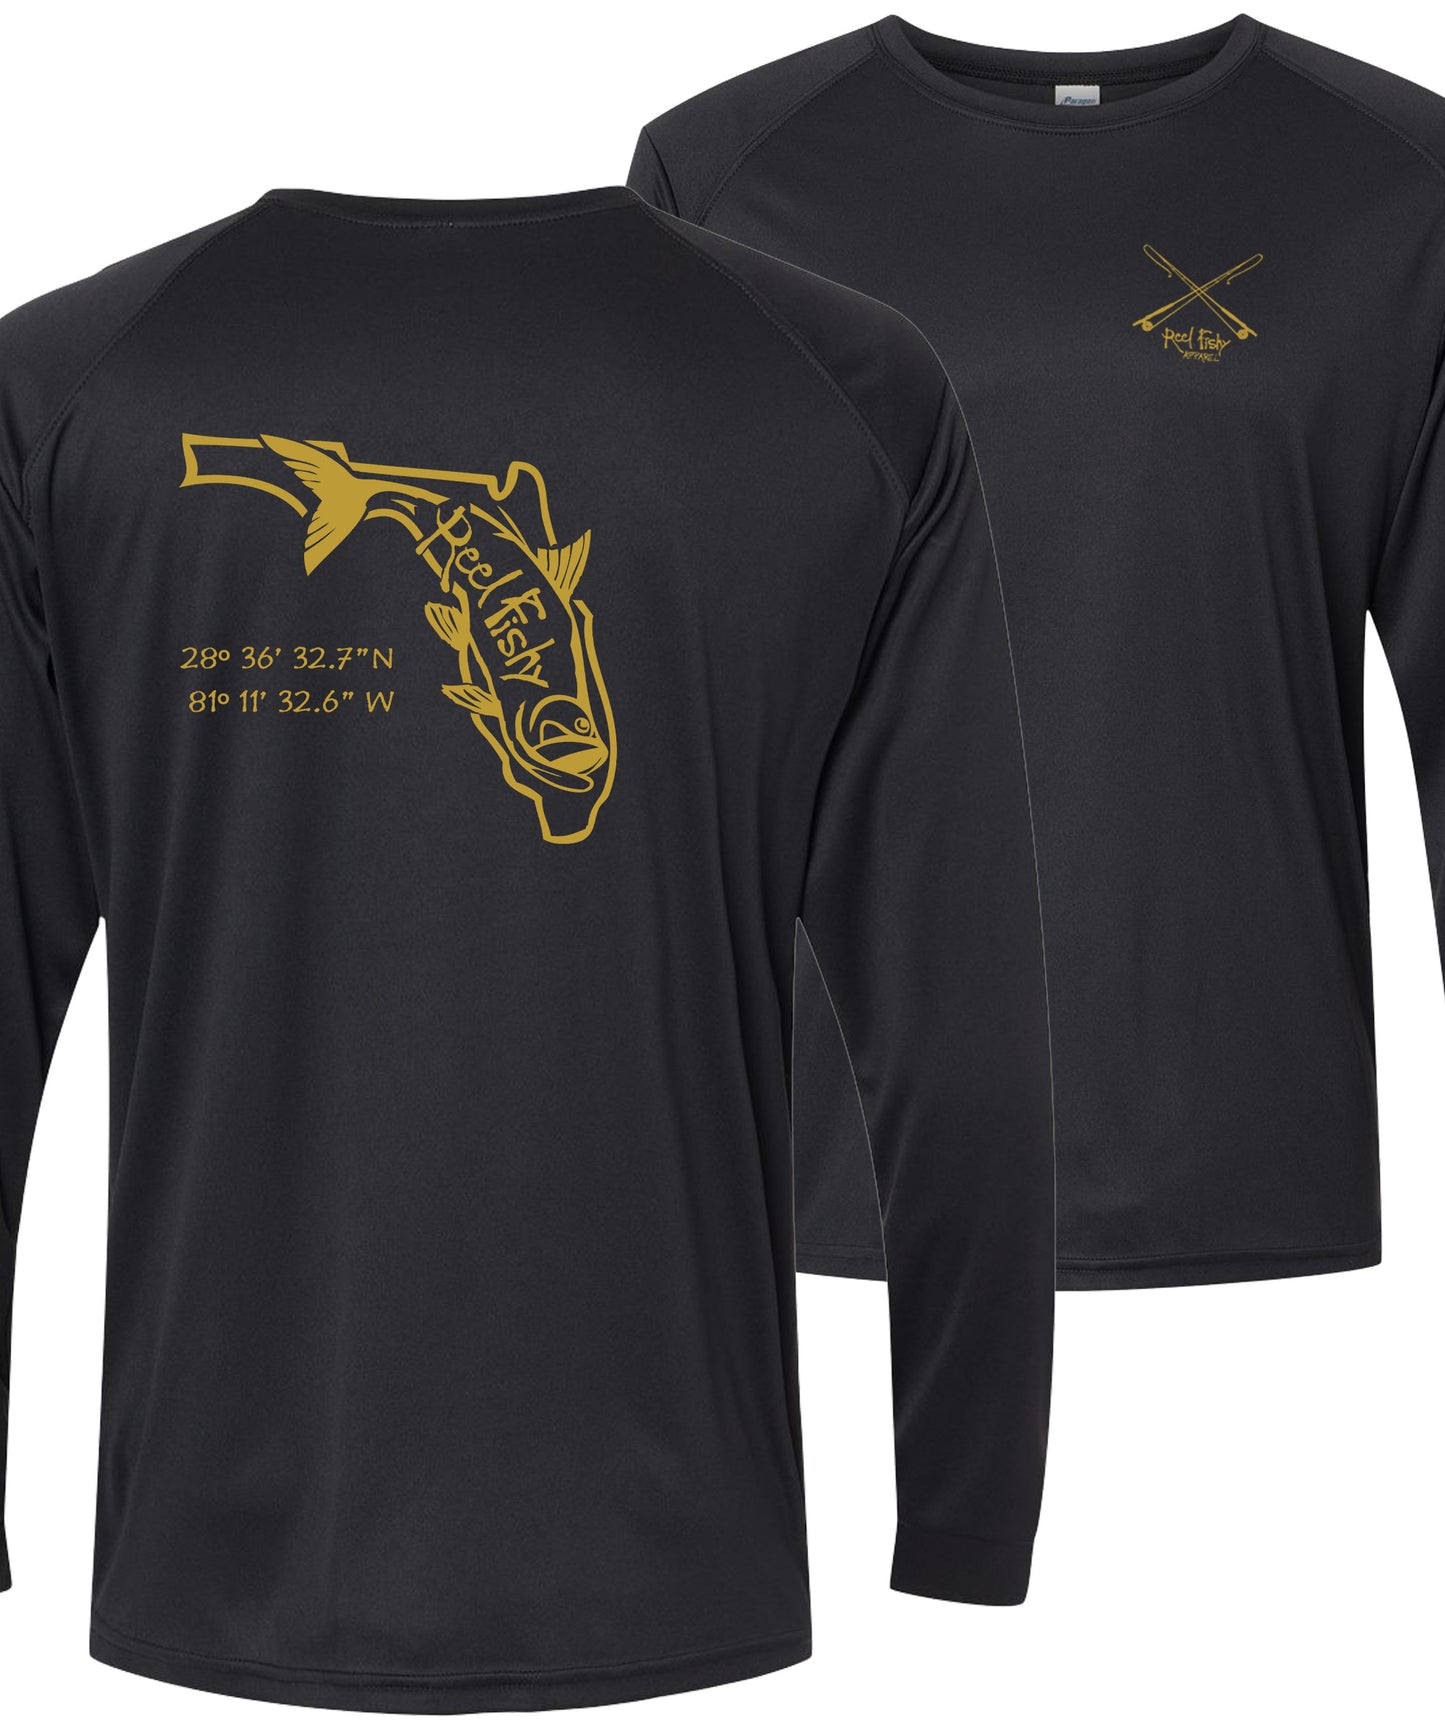 Black/Gold Tarpon State of FL Team Performance Shirts 50+UV Sun Protection Long Sleeves